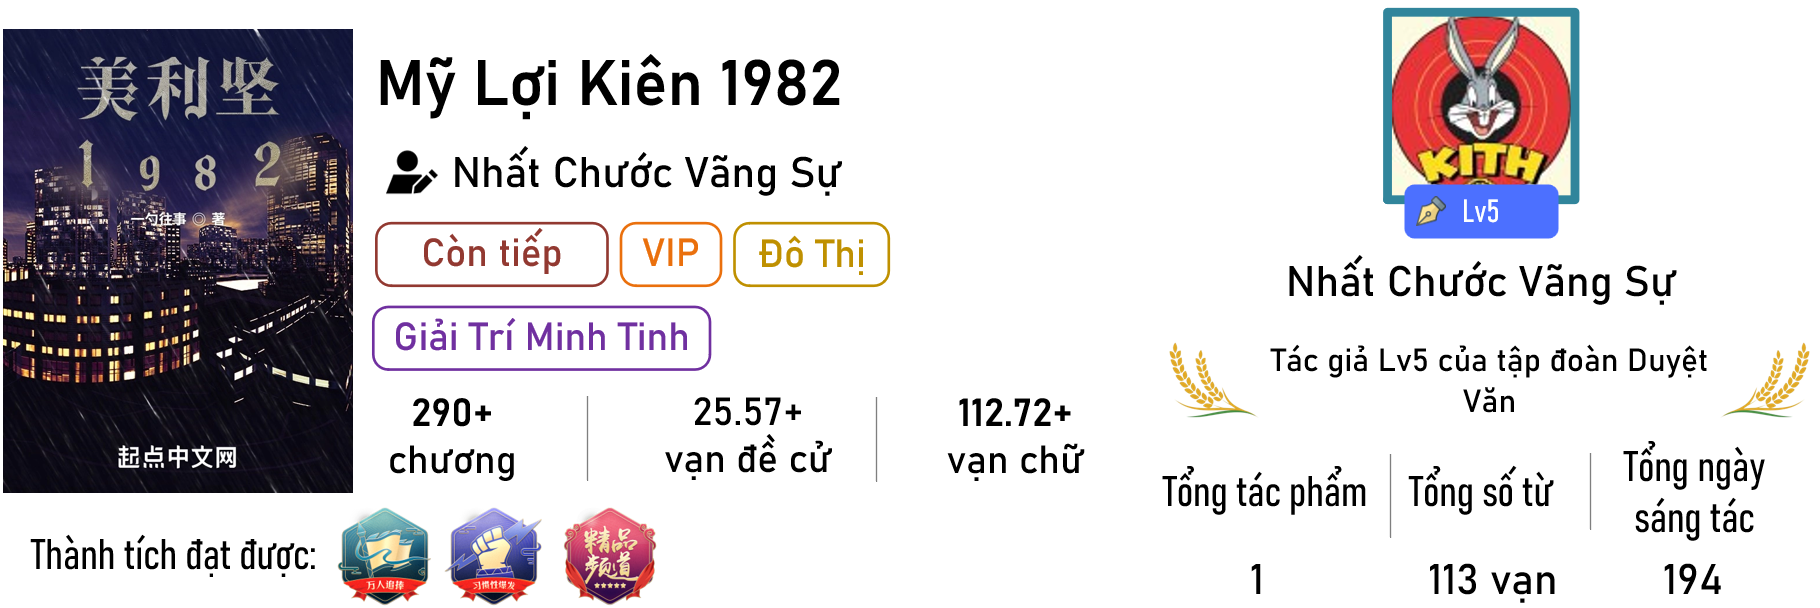 my loi kien 1982, review, danh gia, thong tin, tom tat